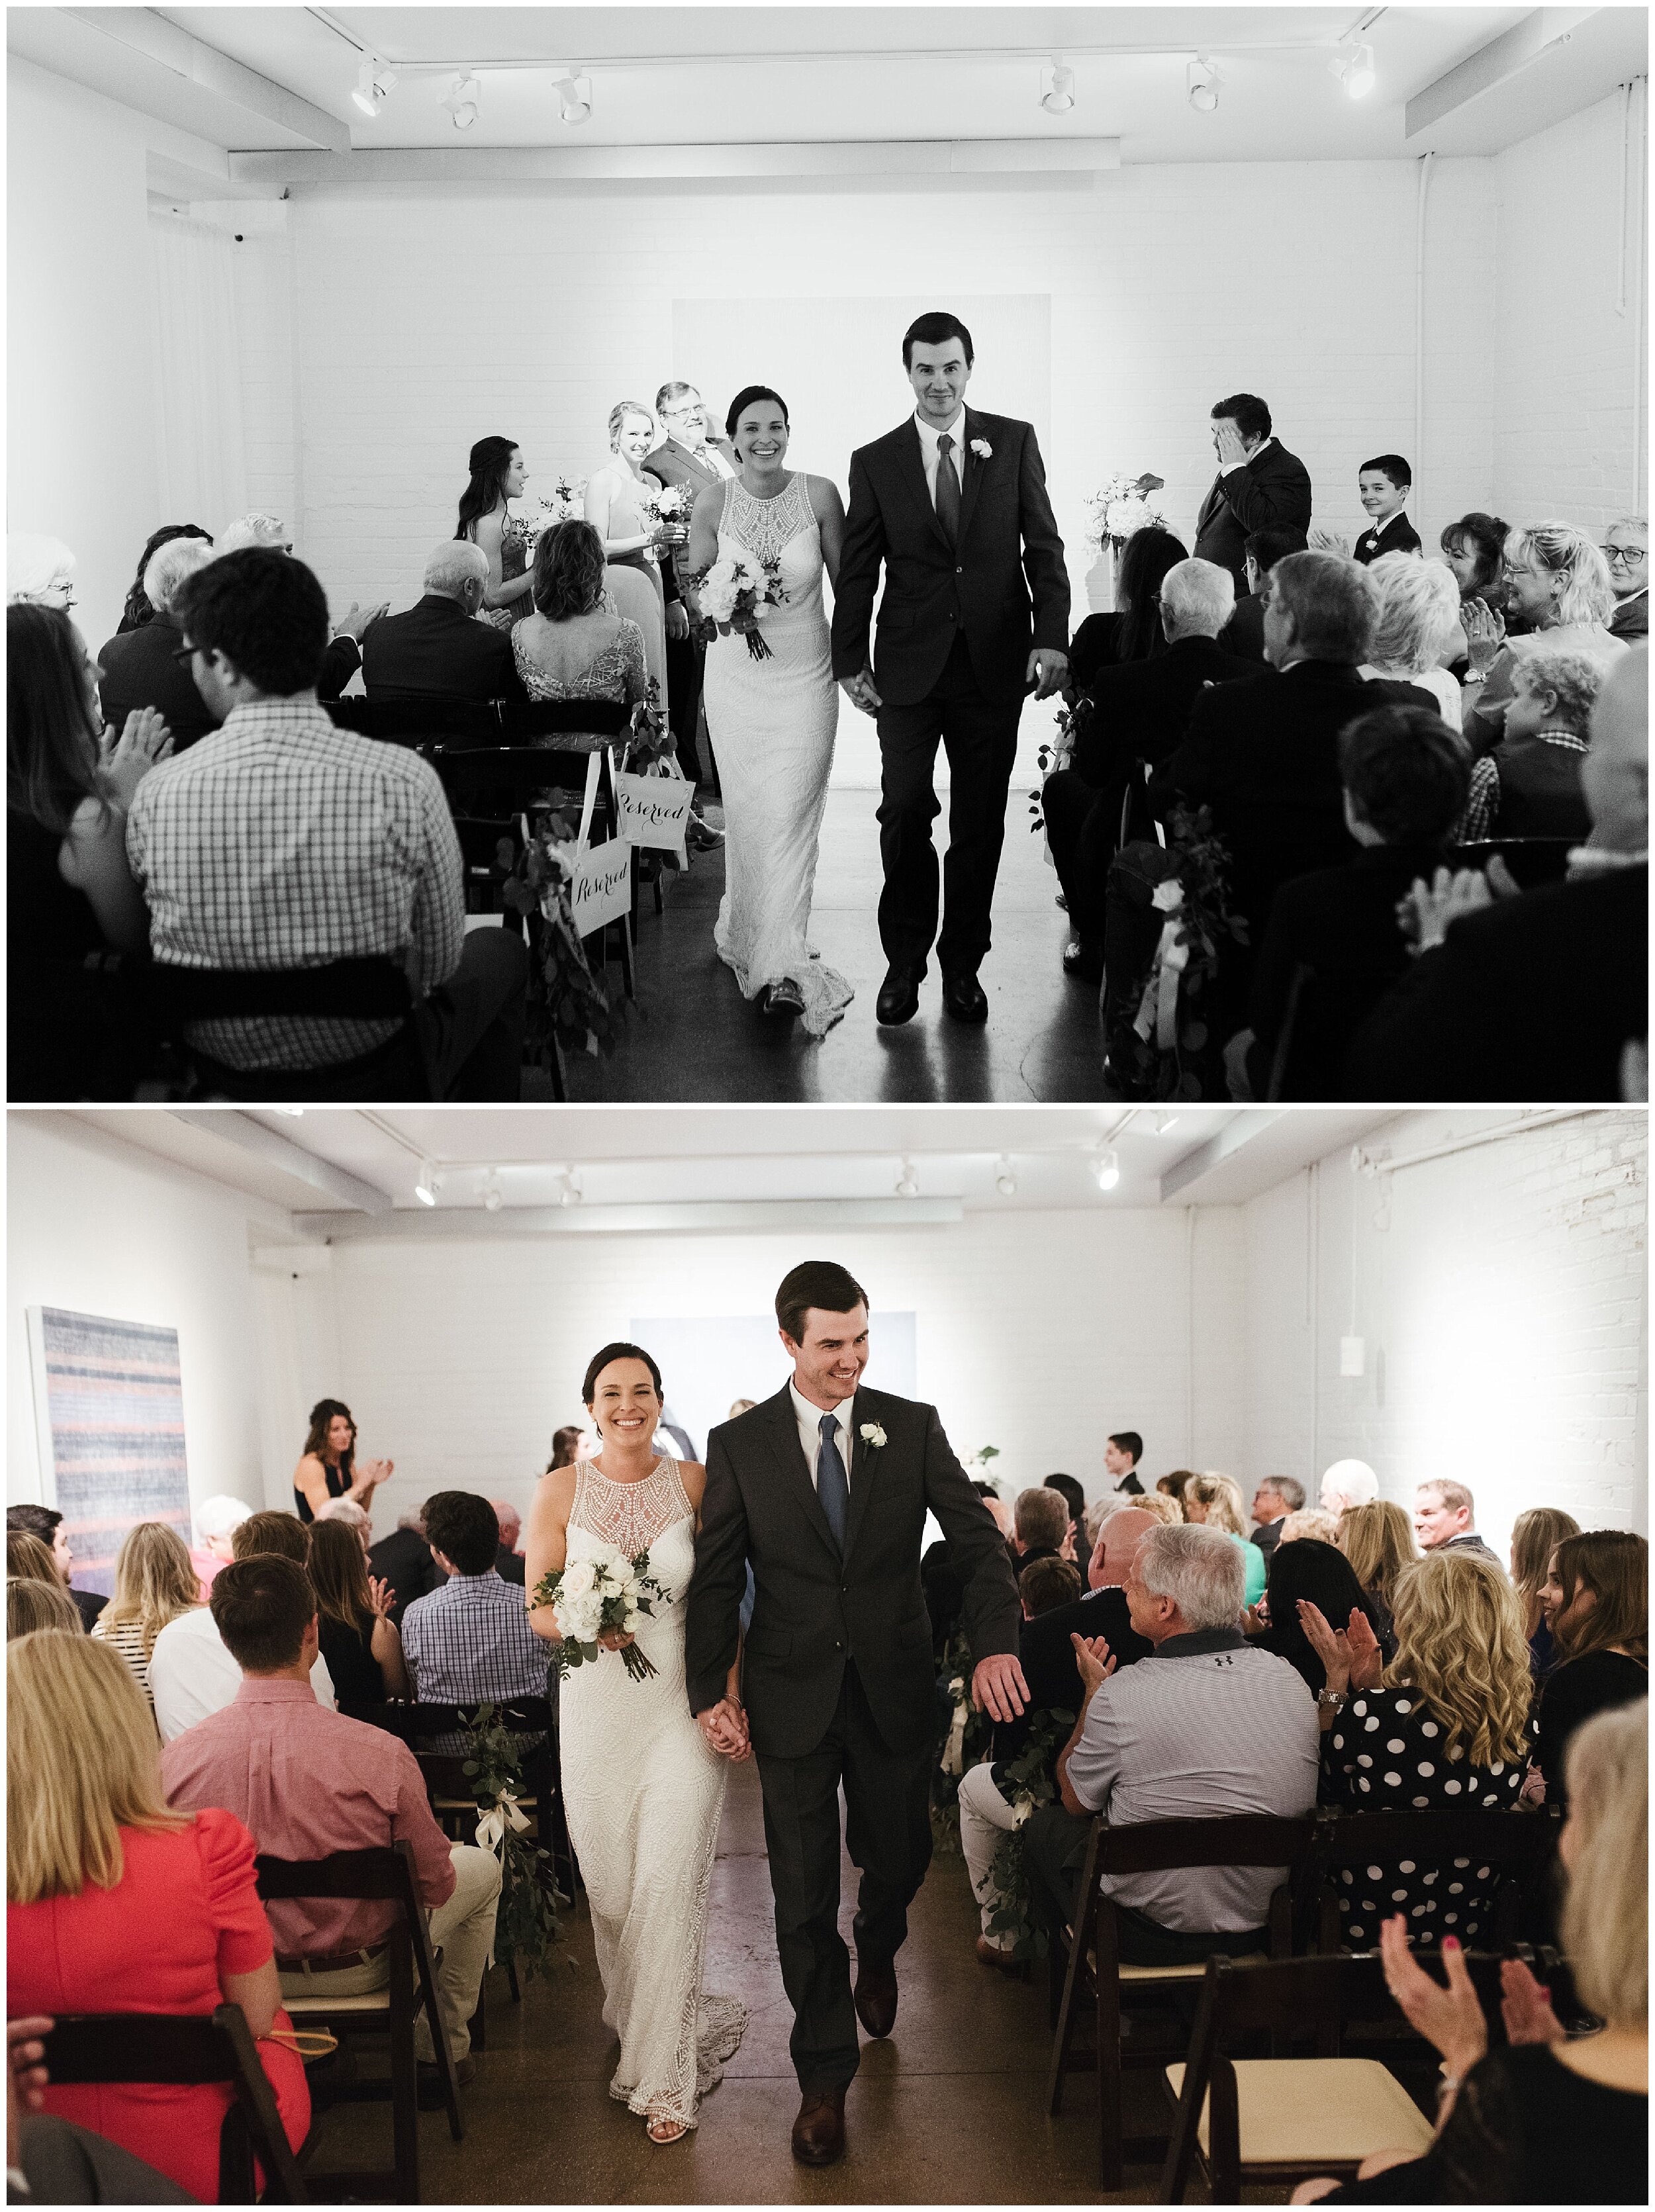  Artspace 111 Wedding | Fort Worth Wedding Photographer | Dallas Wedding Photographer | www.jordanmitchellphotography.com 